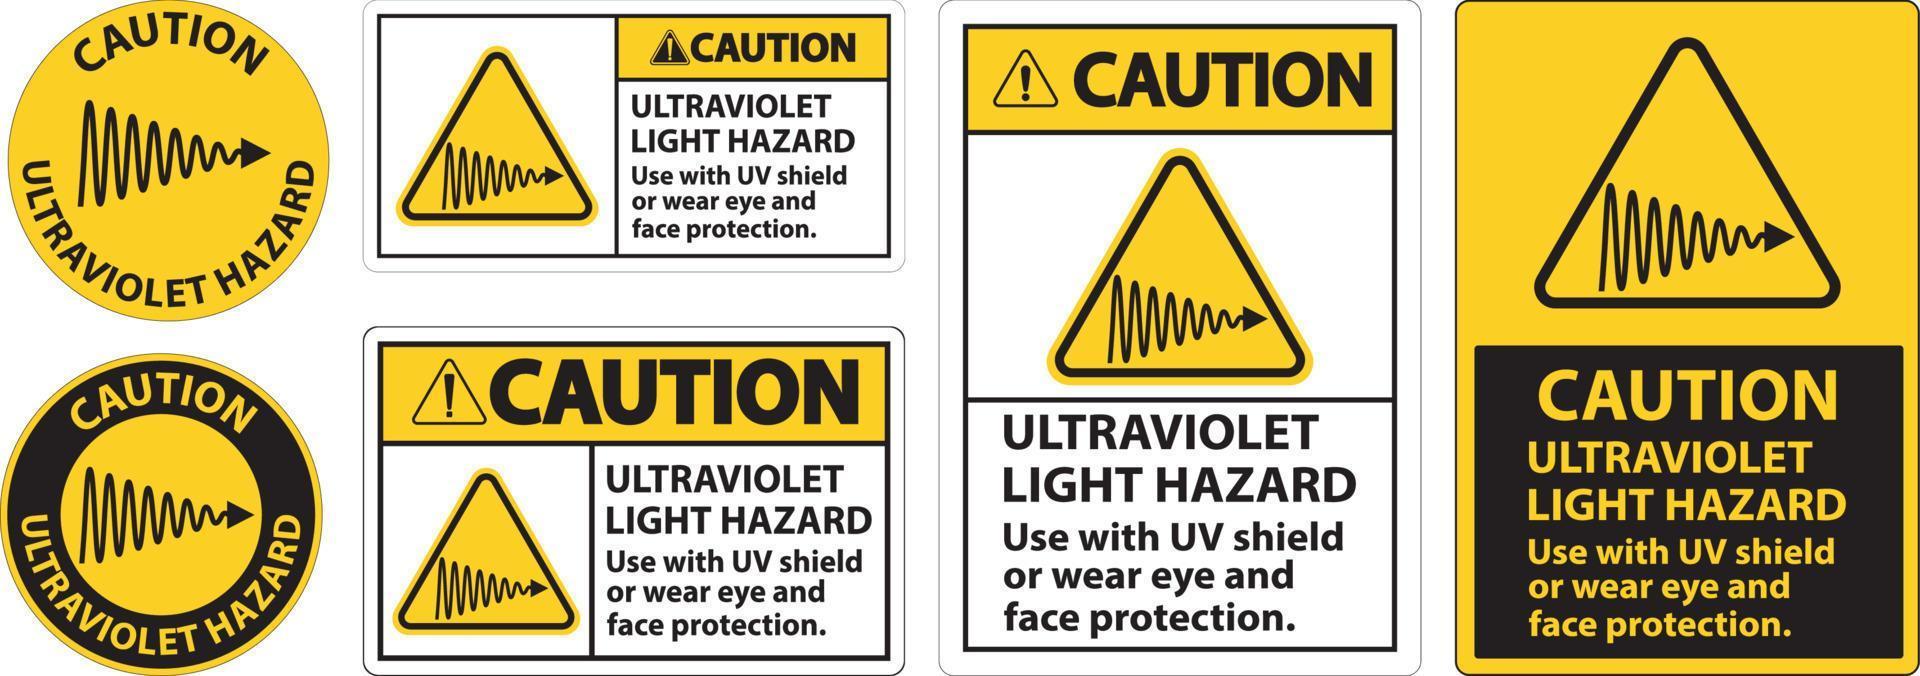 Caution Ultraviolet Light Hazard Label On White Background vector